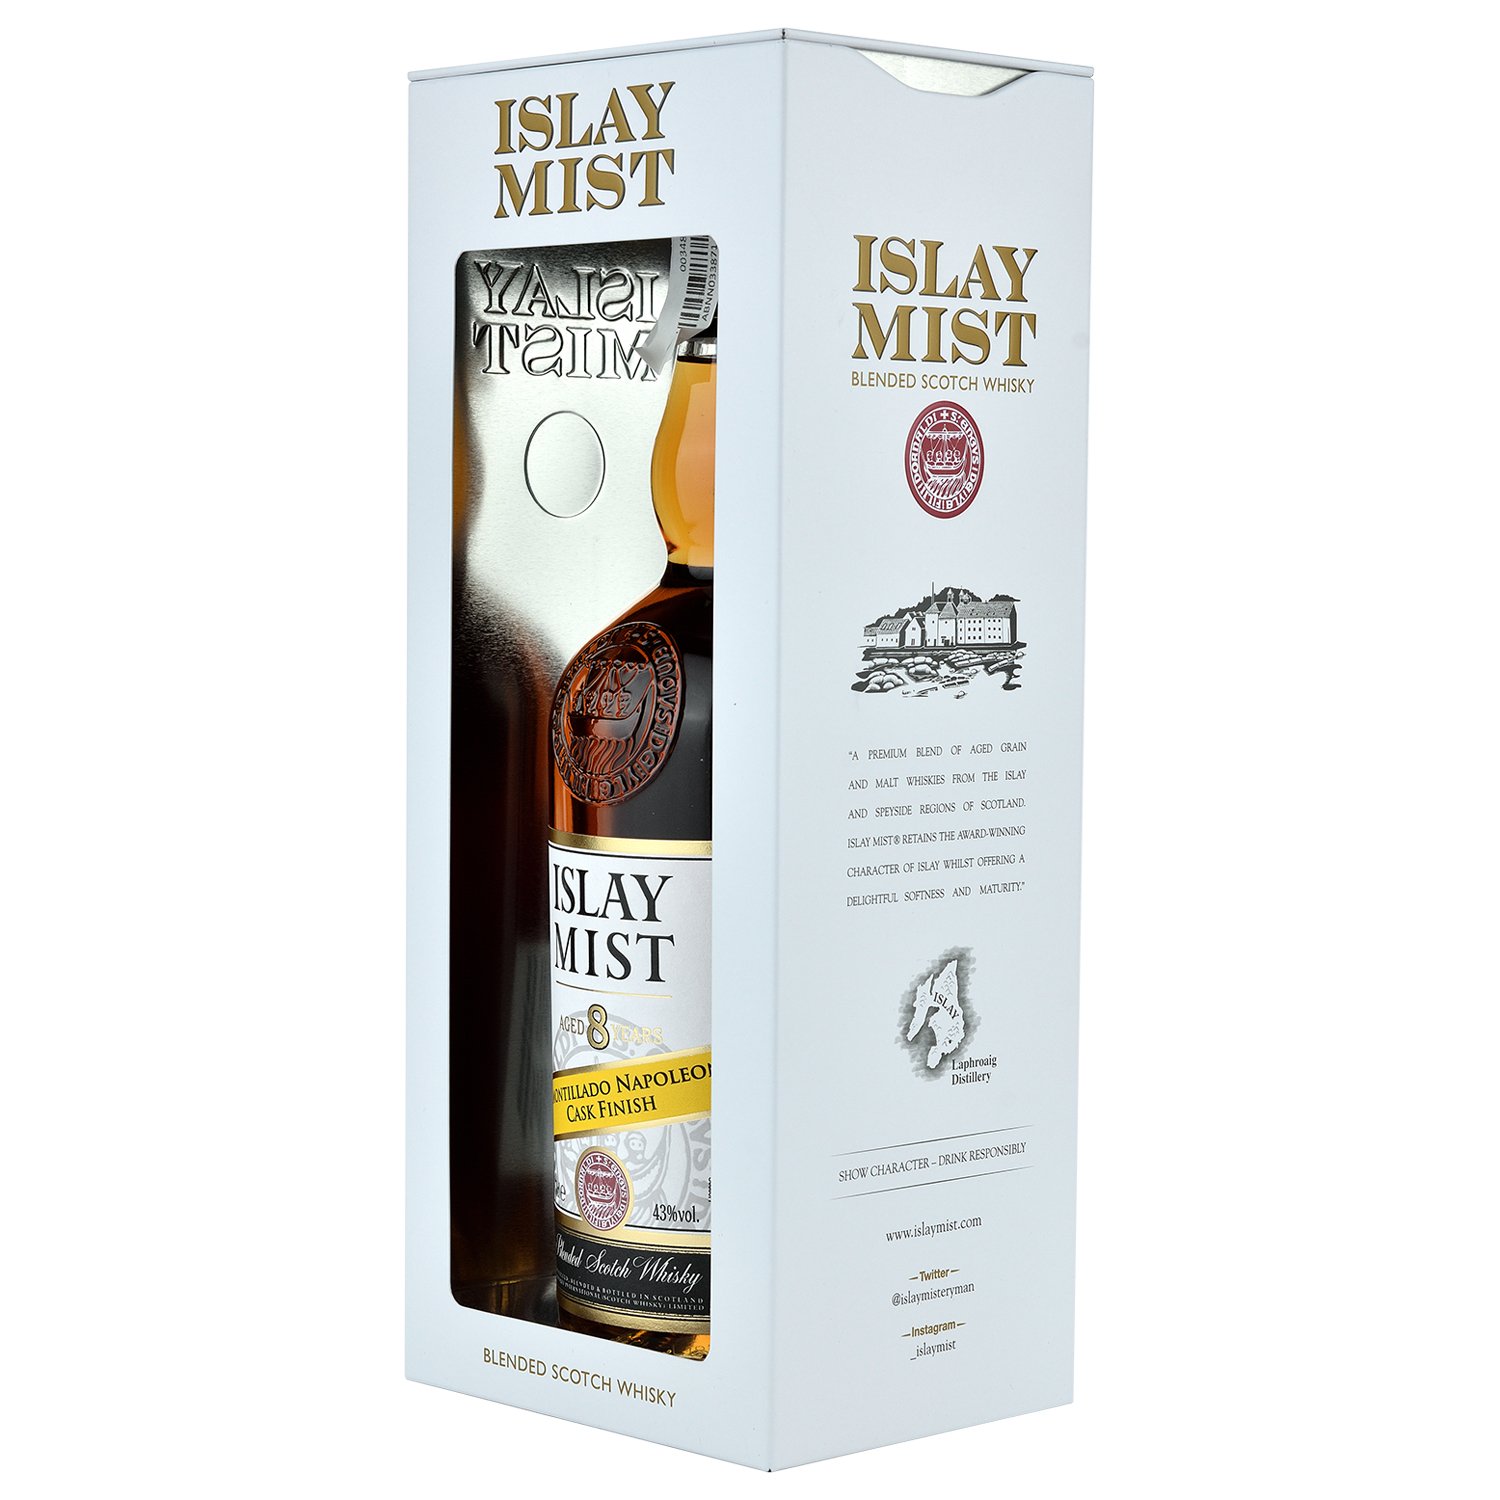 Виски Islay Mist Amontillado Napoleon Cask Finish Blended Scotch Whisky 8 yo, 43%, 0,7 л - фото 2